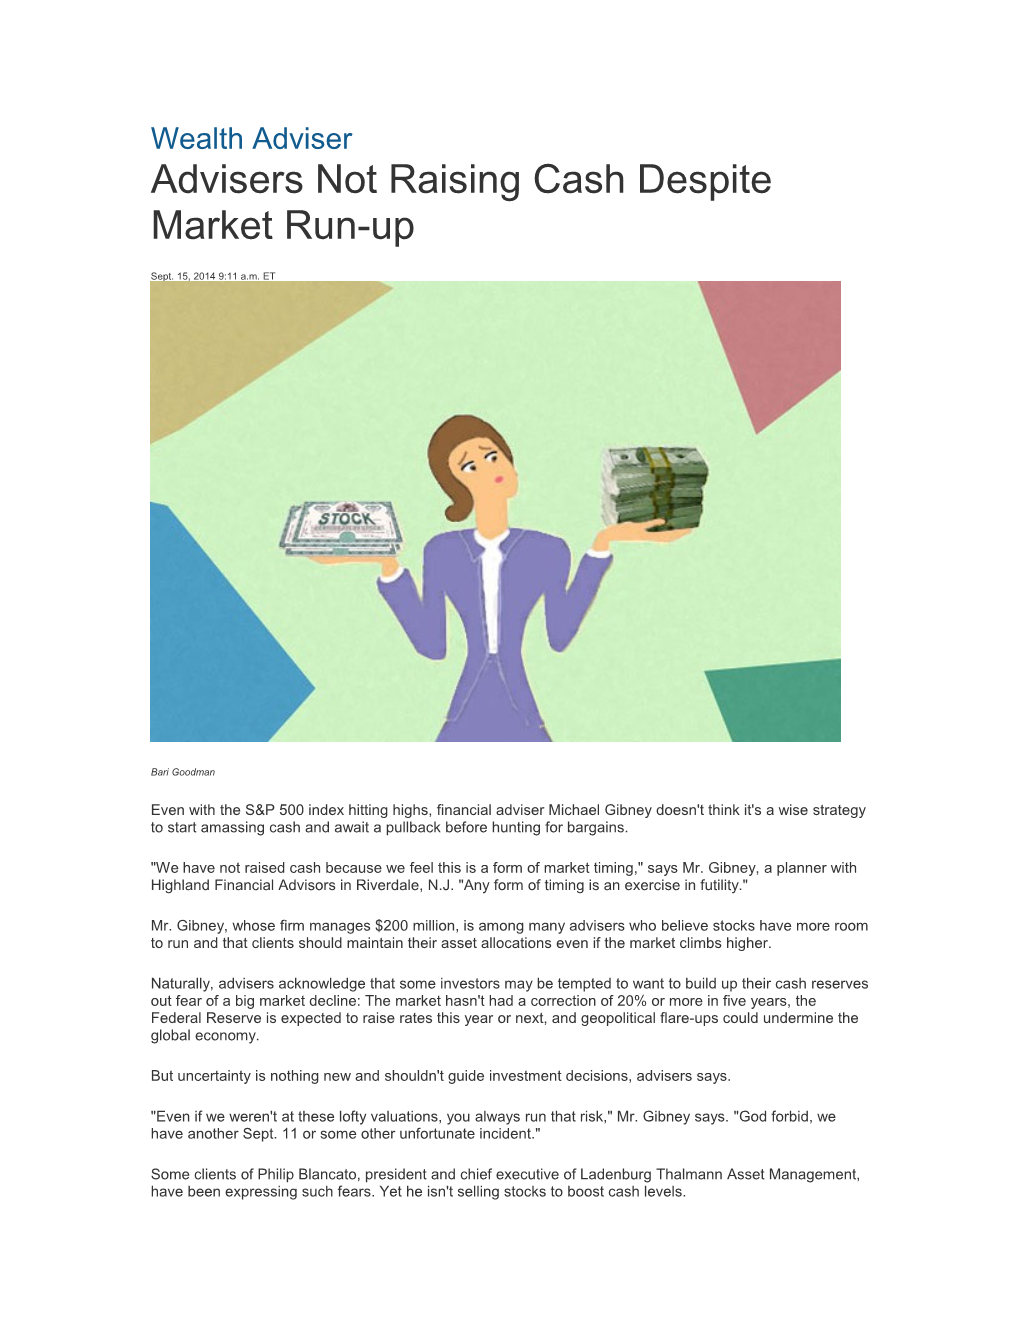 Advisers Not Raising Cash Despite Market Run-Up